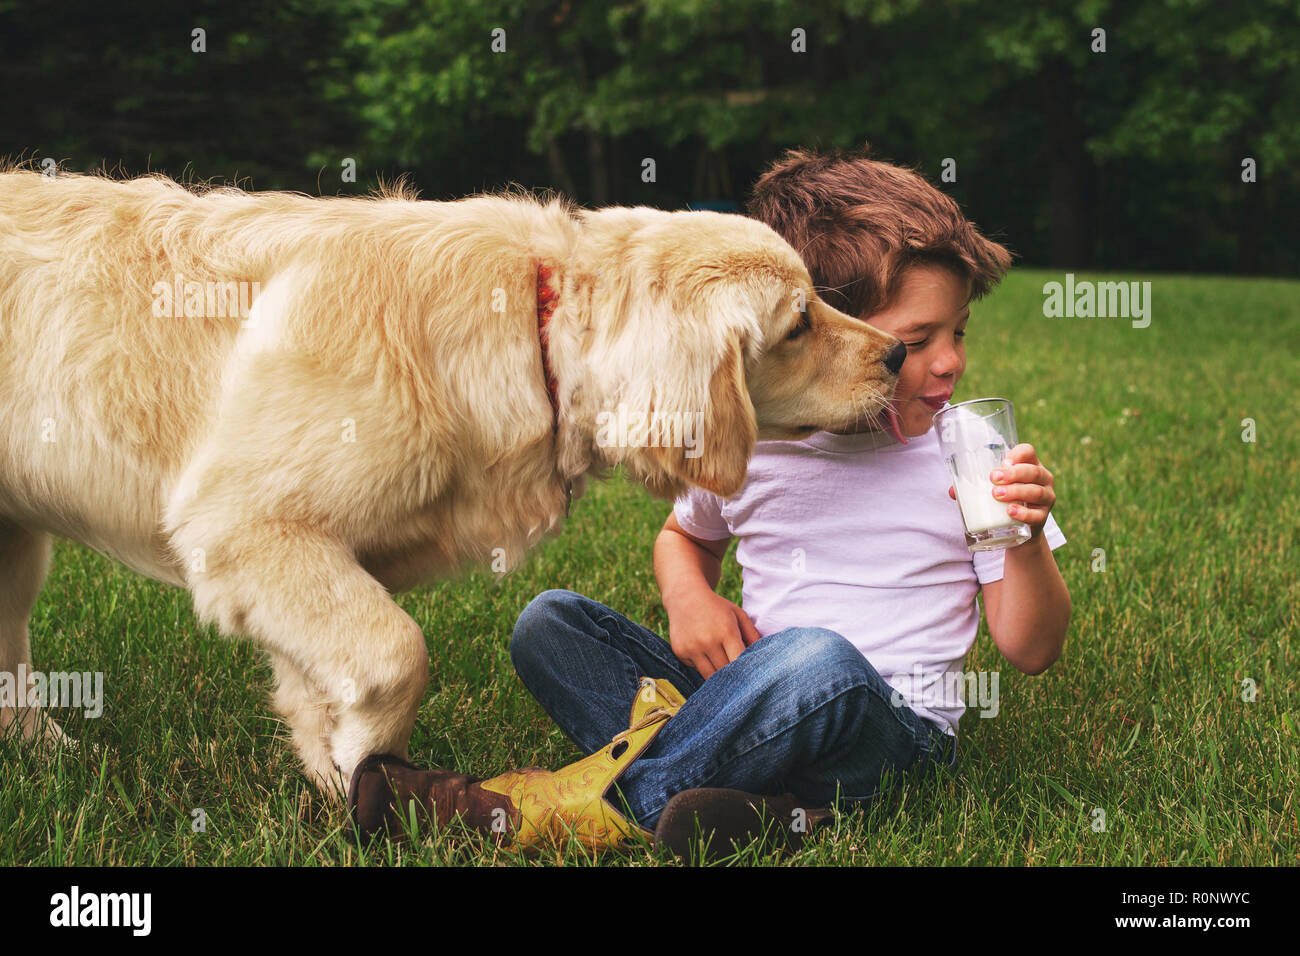 Boy drinking a glass of milk while a golden retriever dog licks his face Stock Photo